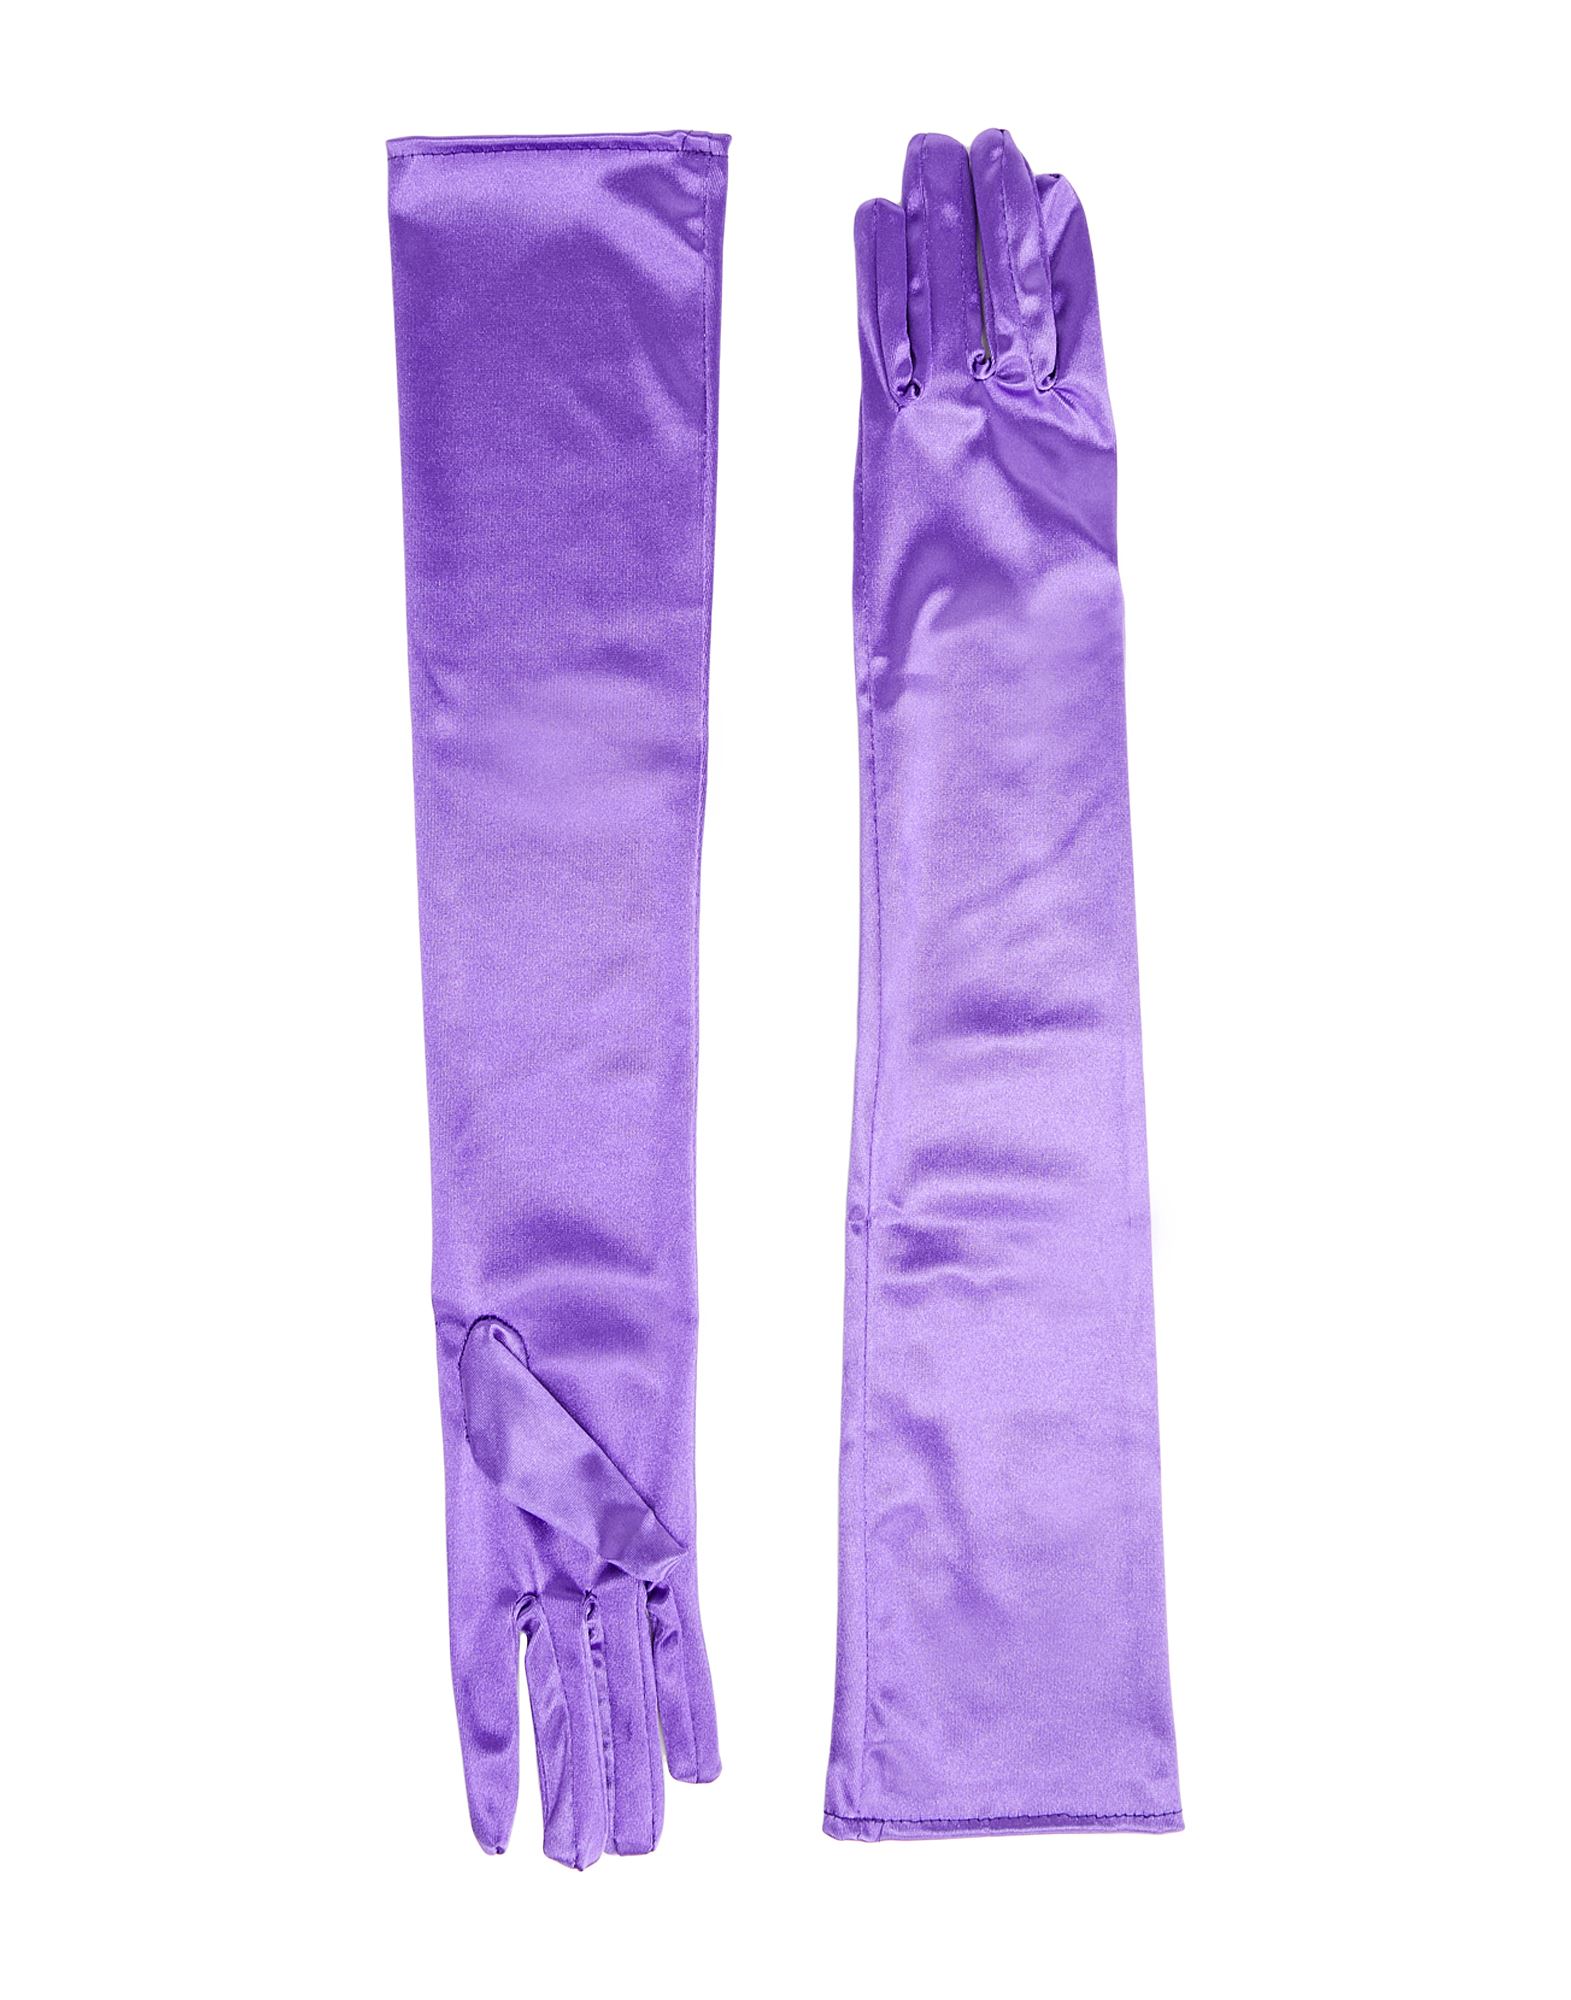 8 By Yoox Gloves In Purple